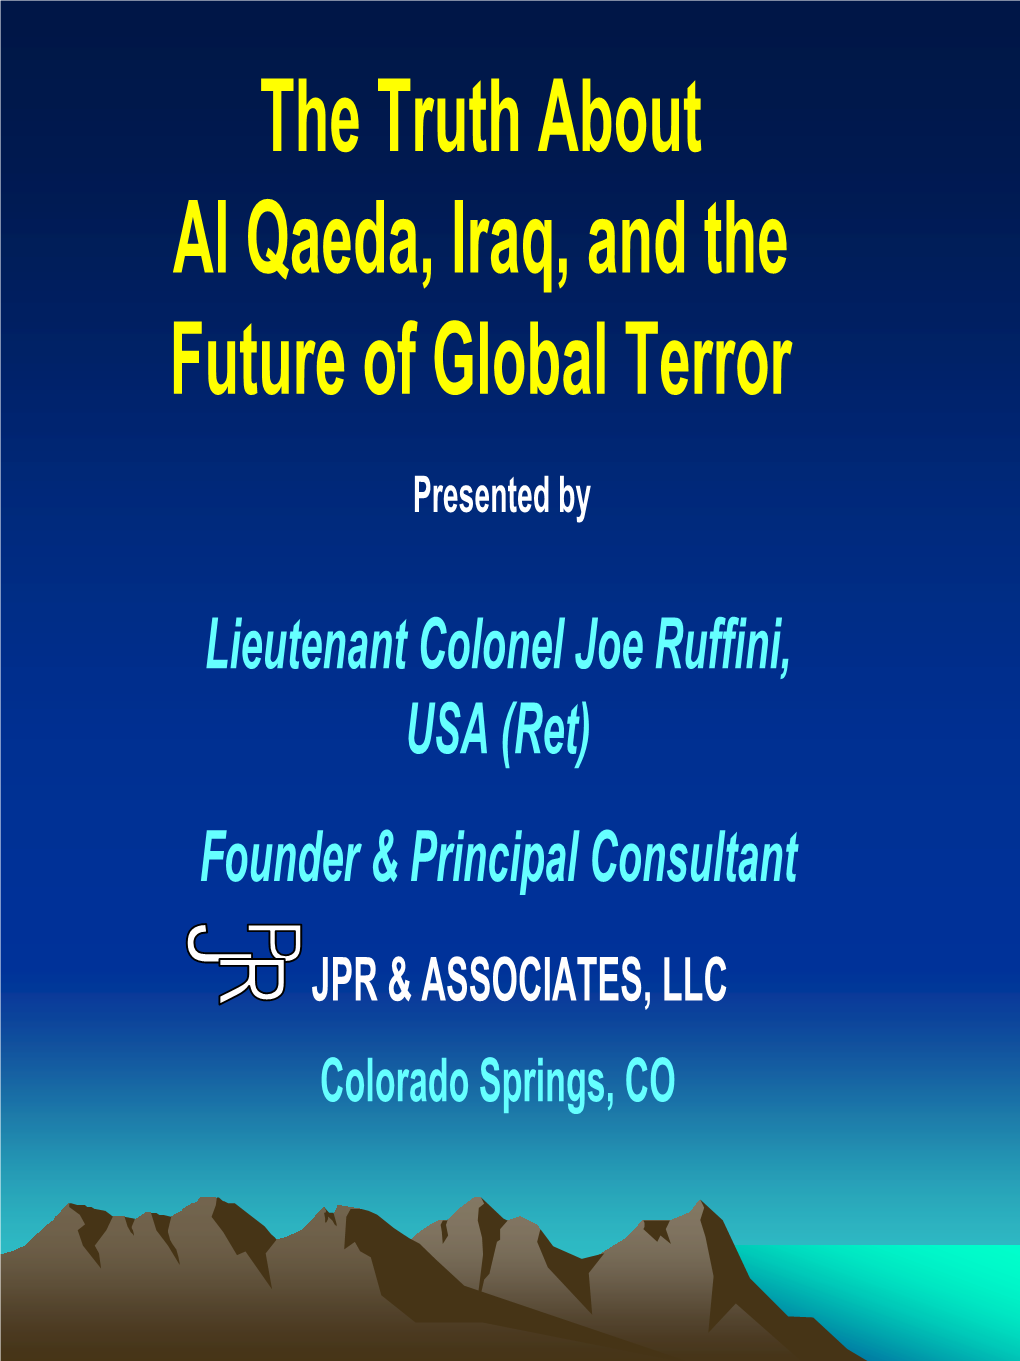 The Truth About Al Qaeda, Iraq, and the Future of Global Terror